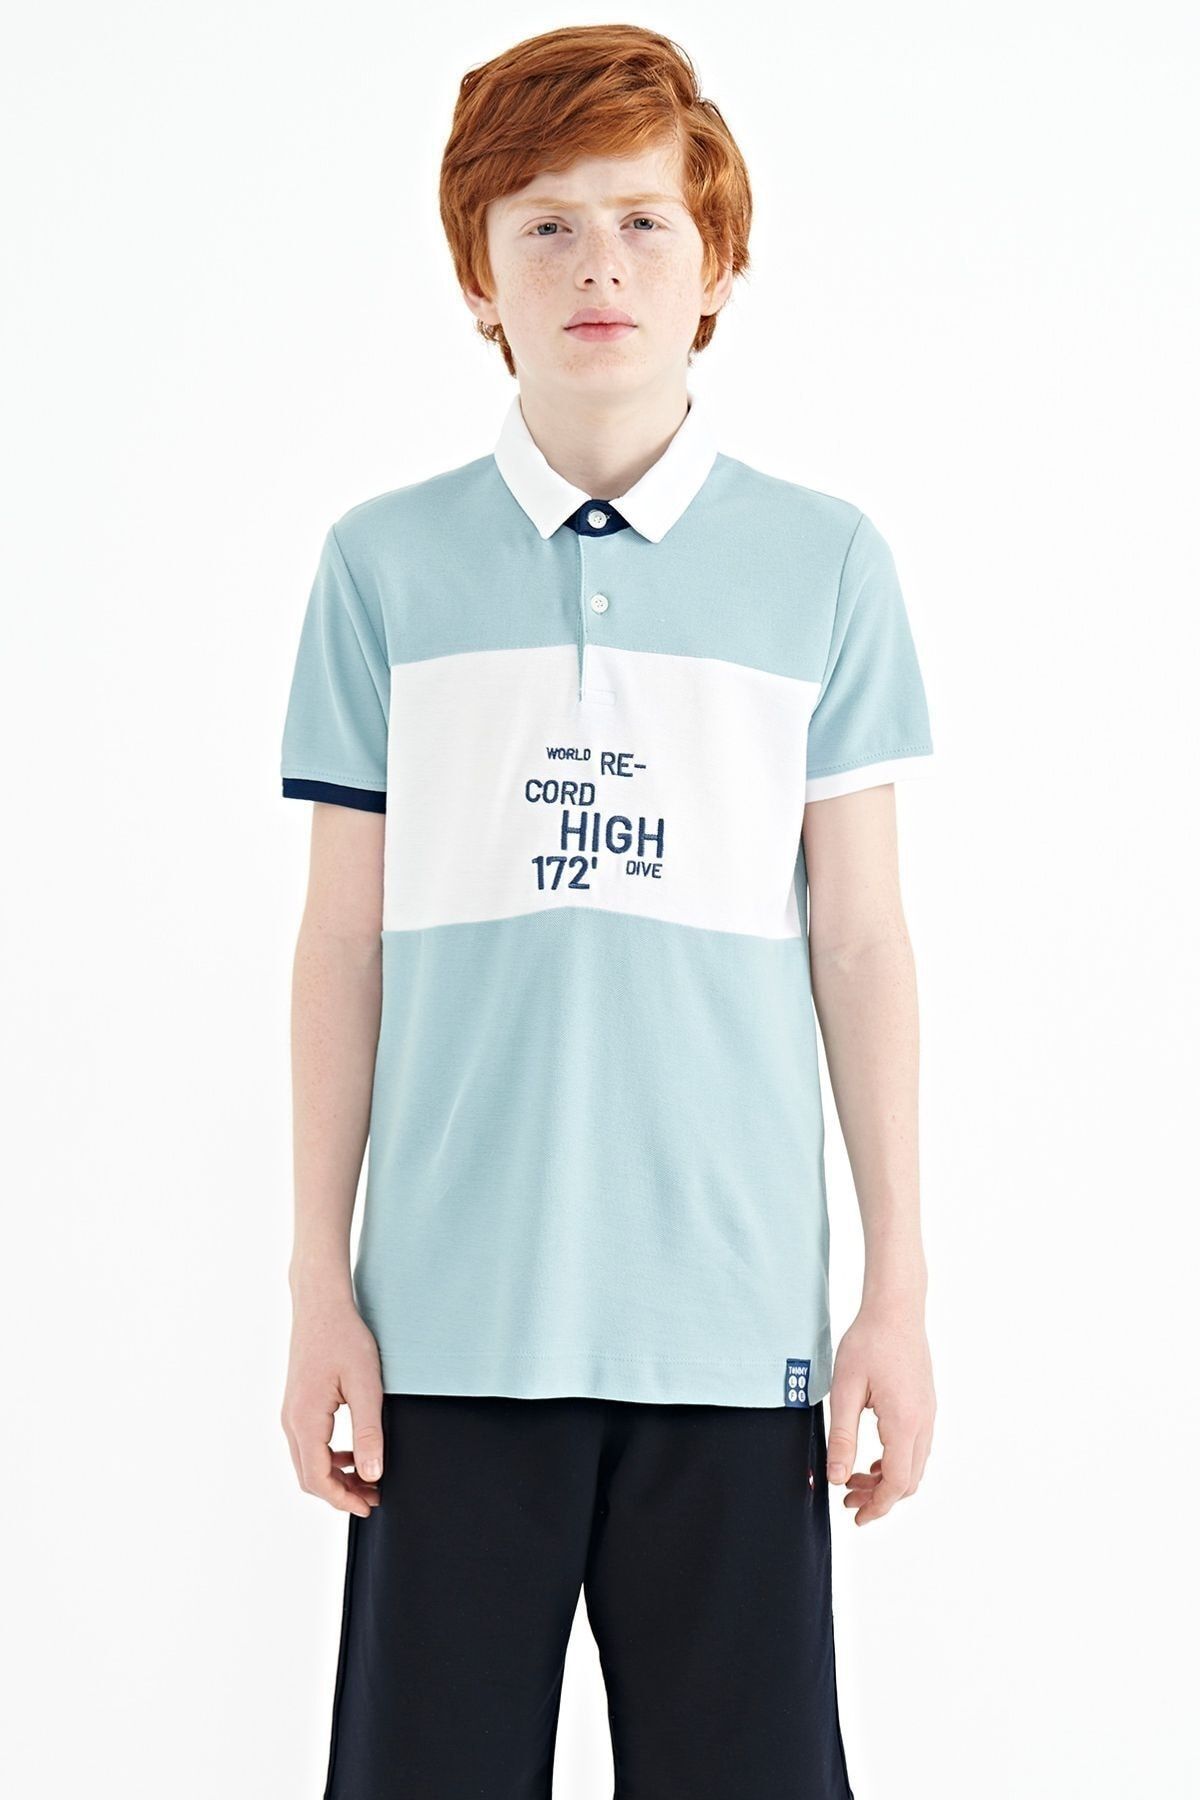 TOMMY LIFE Açık Mavi Renk Geçişli Nakış Detaylı Standart Kalıp Polo Yaka Erkek Çocuk T-shirt - 11110